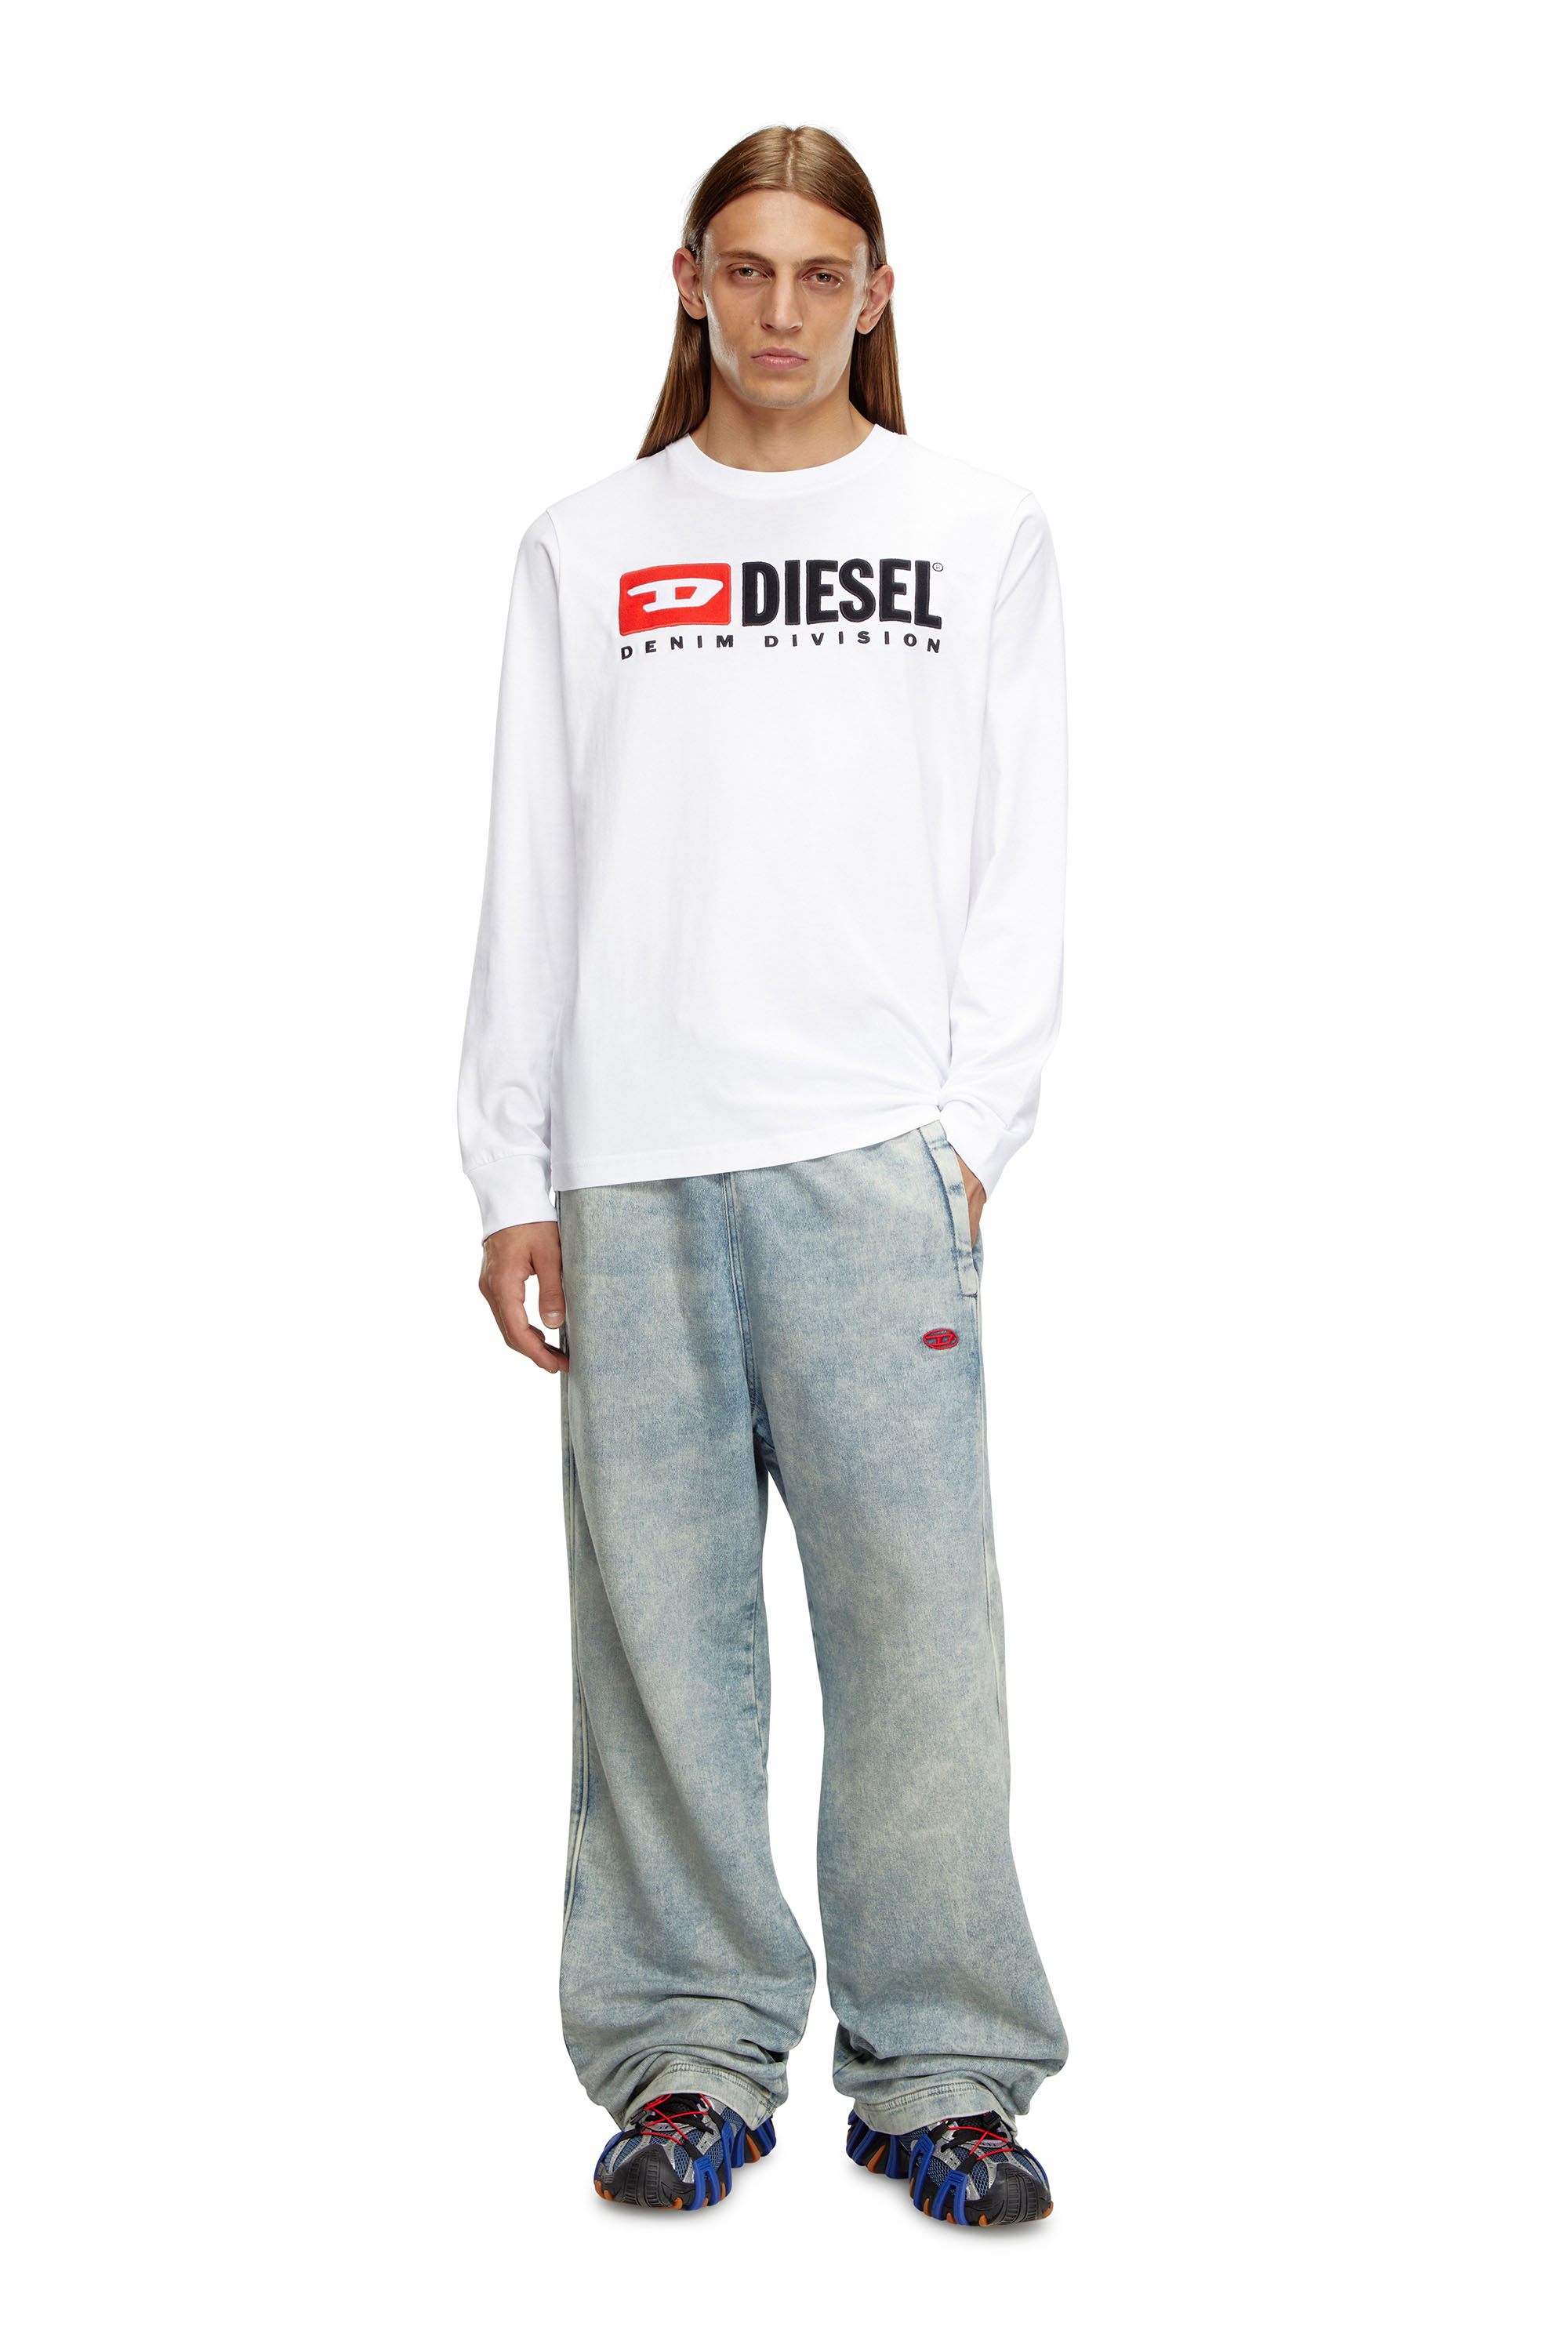 Diesel - T-JUST-LS-DIV, Homme T-shirt à manches longues avec broderie in Blanc - Image 2